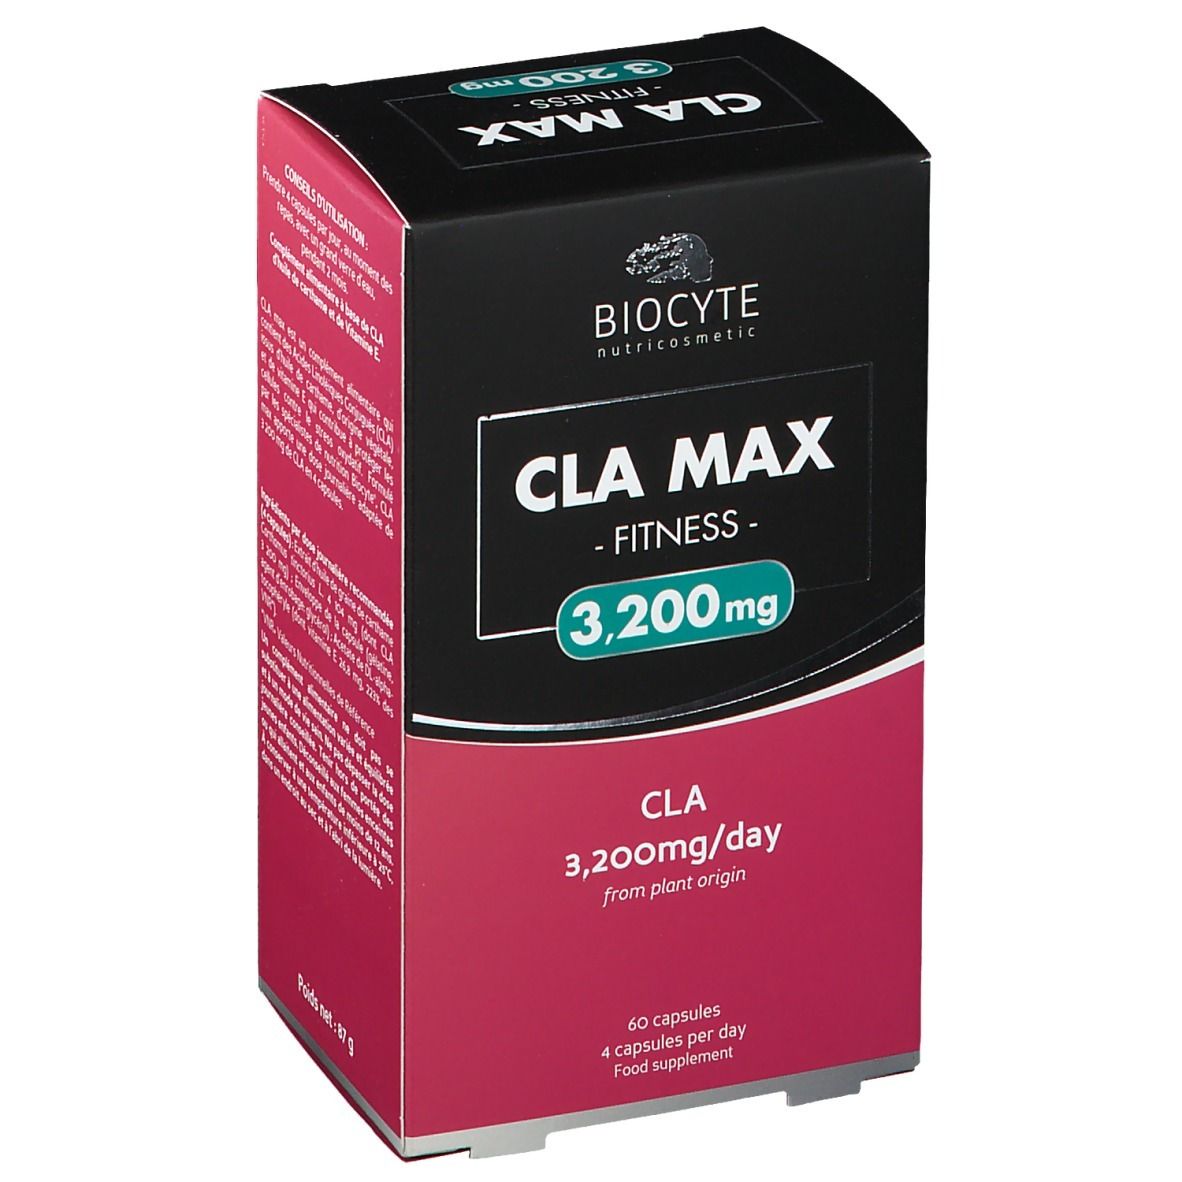 Biocyte CLA Max